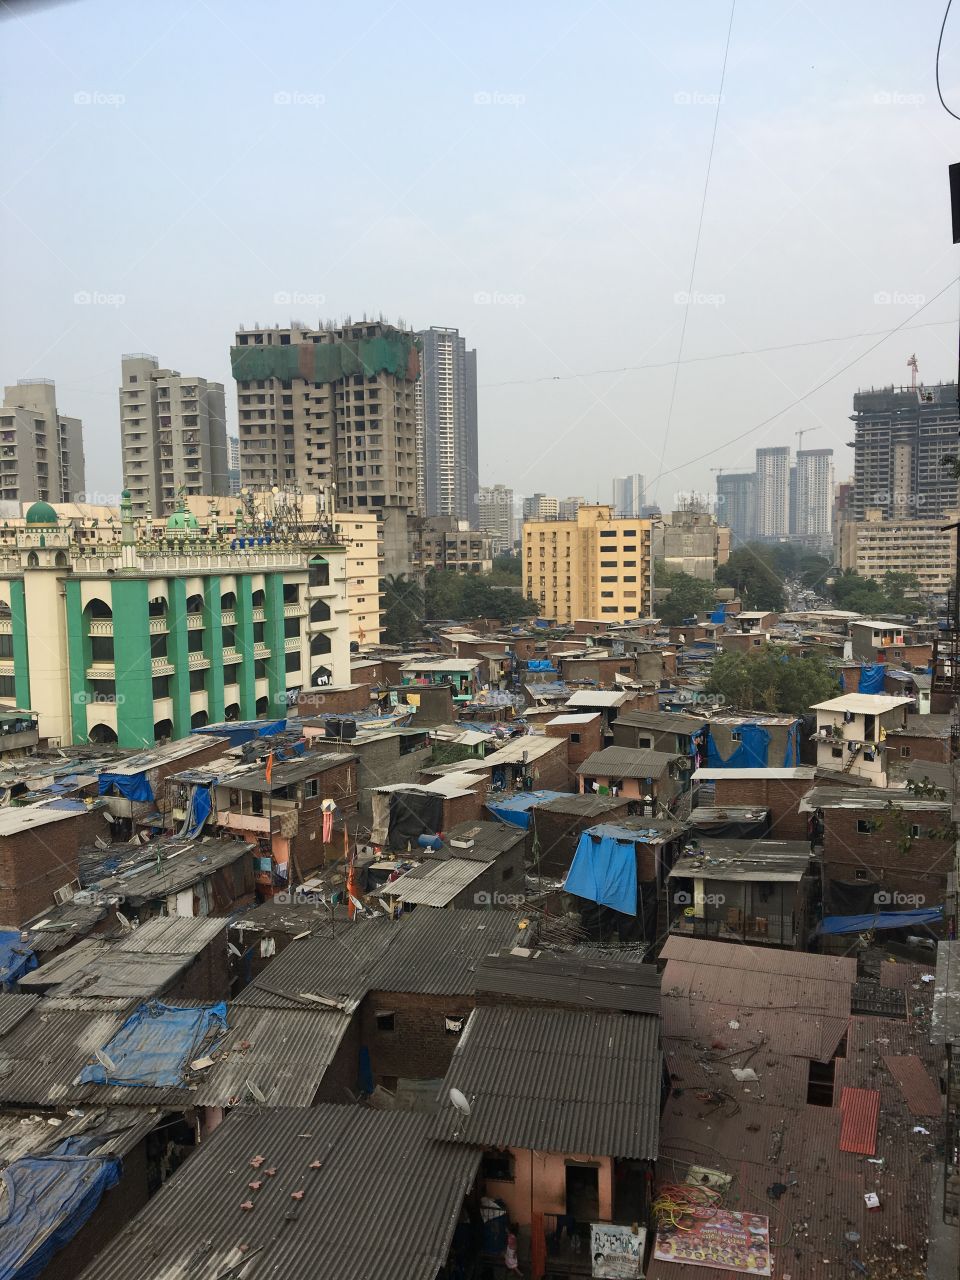 City view and slum in Mumbai